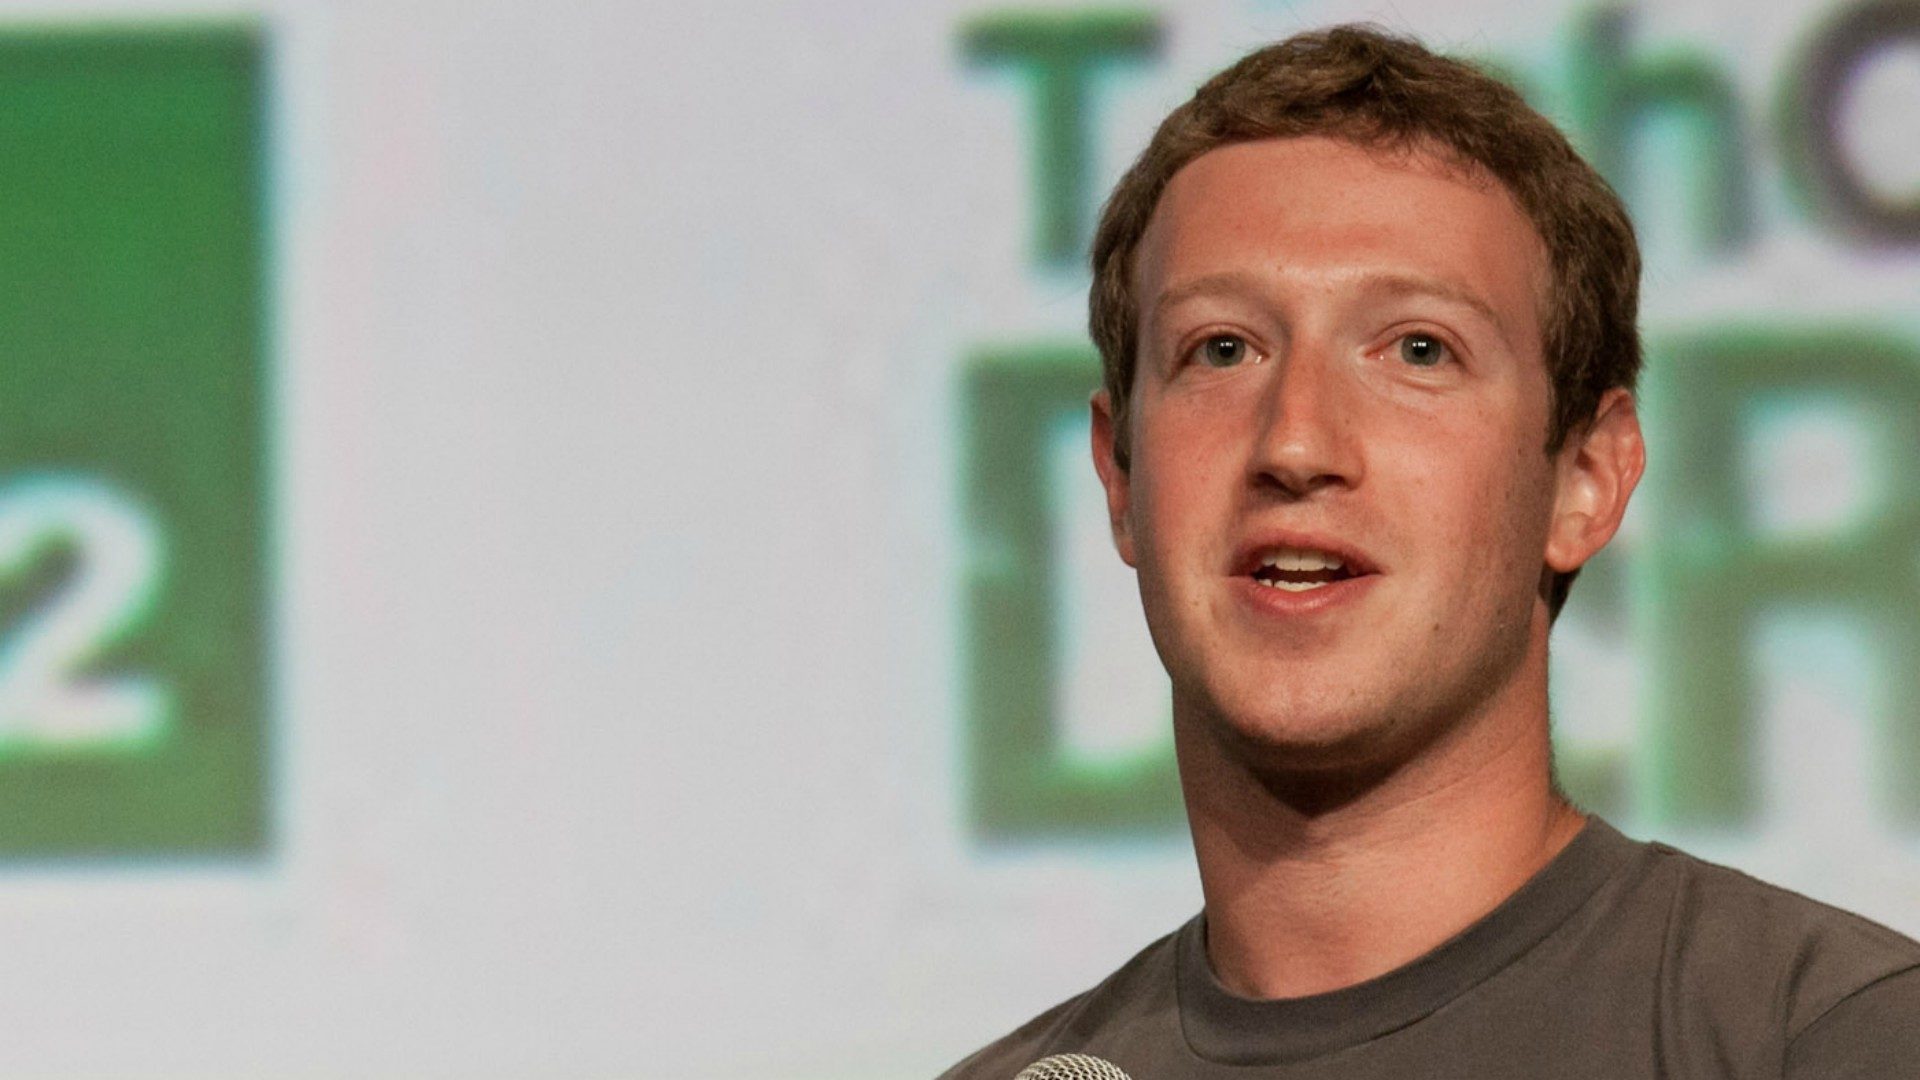 Mark Zuckerberg est le fondateur de Facebook (Photo:JD Lasica/Flickr/CC BY 2.0)